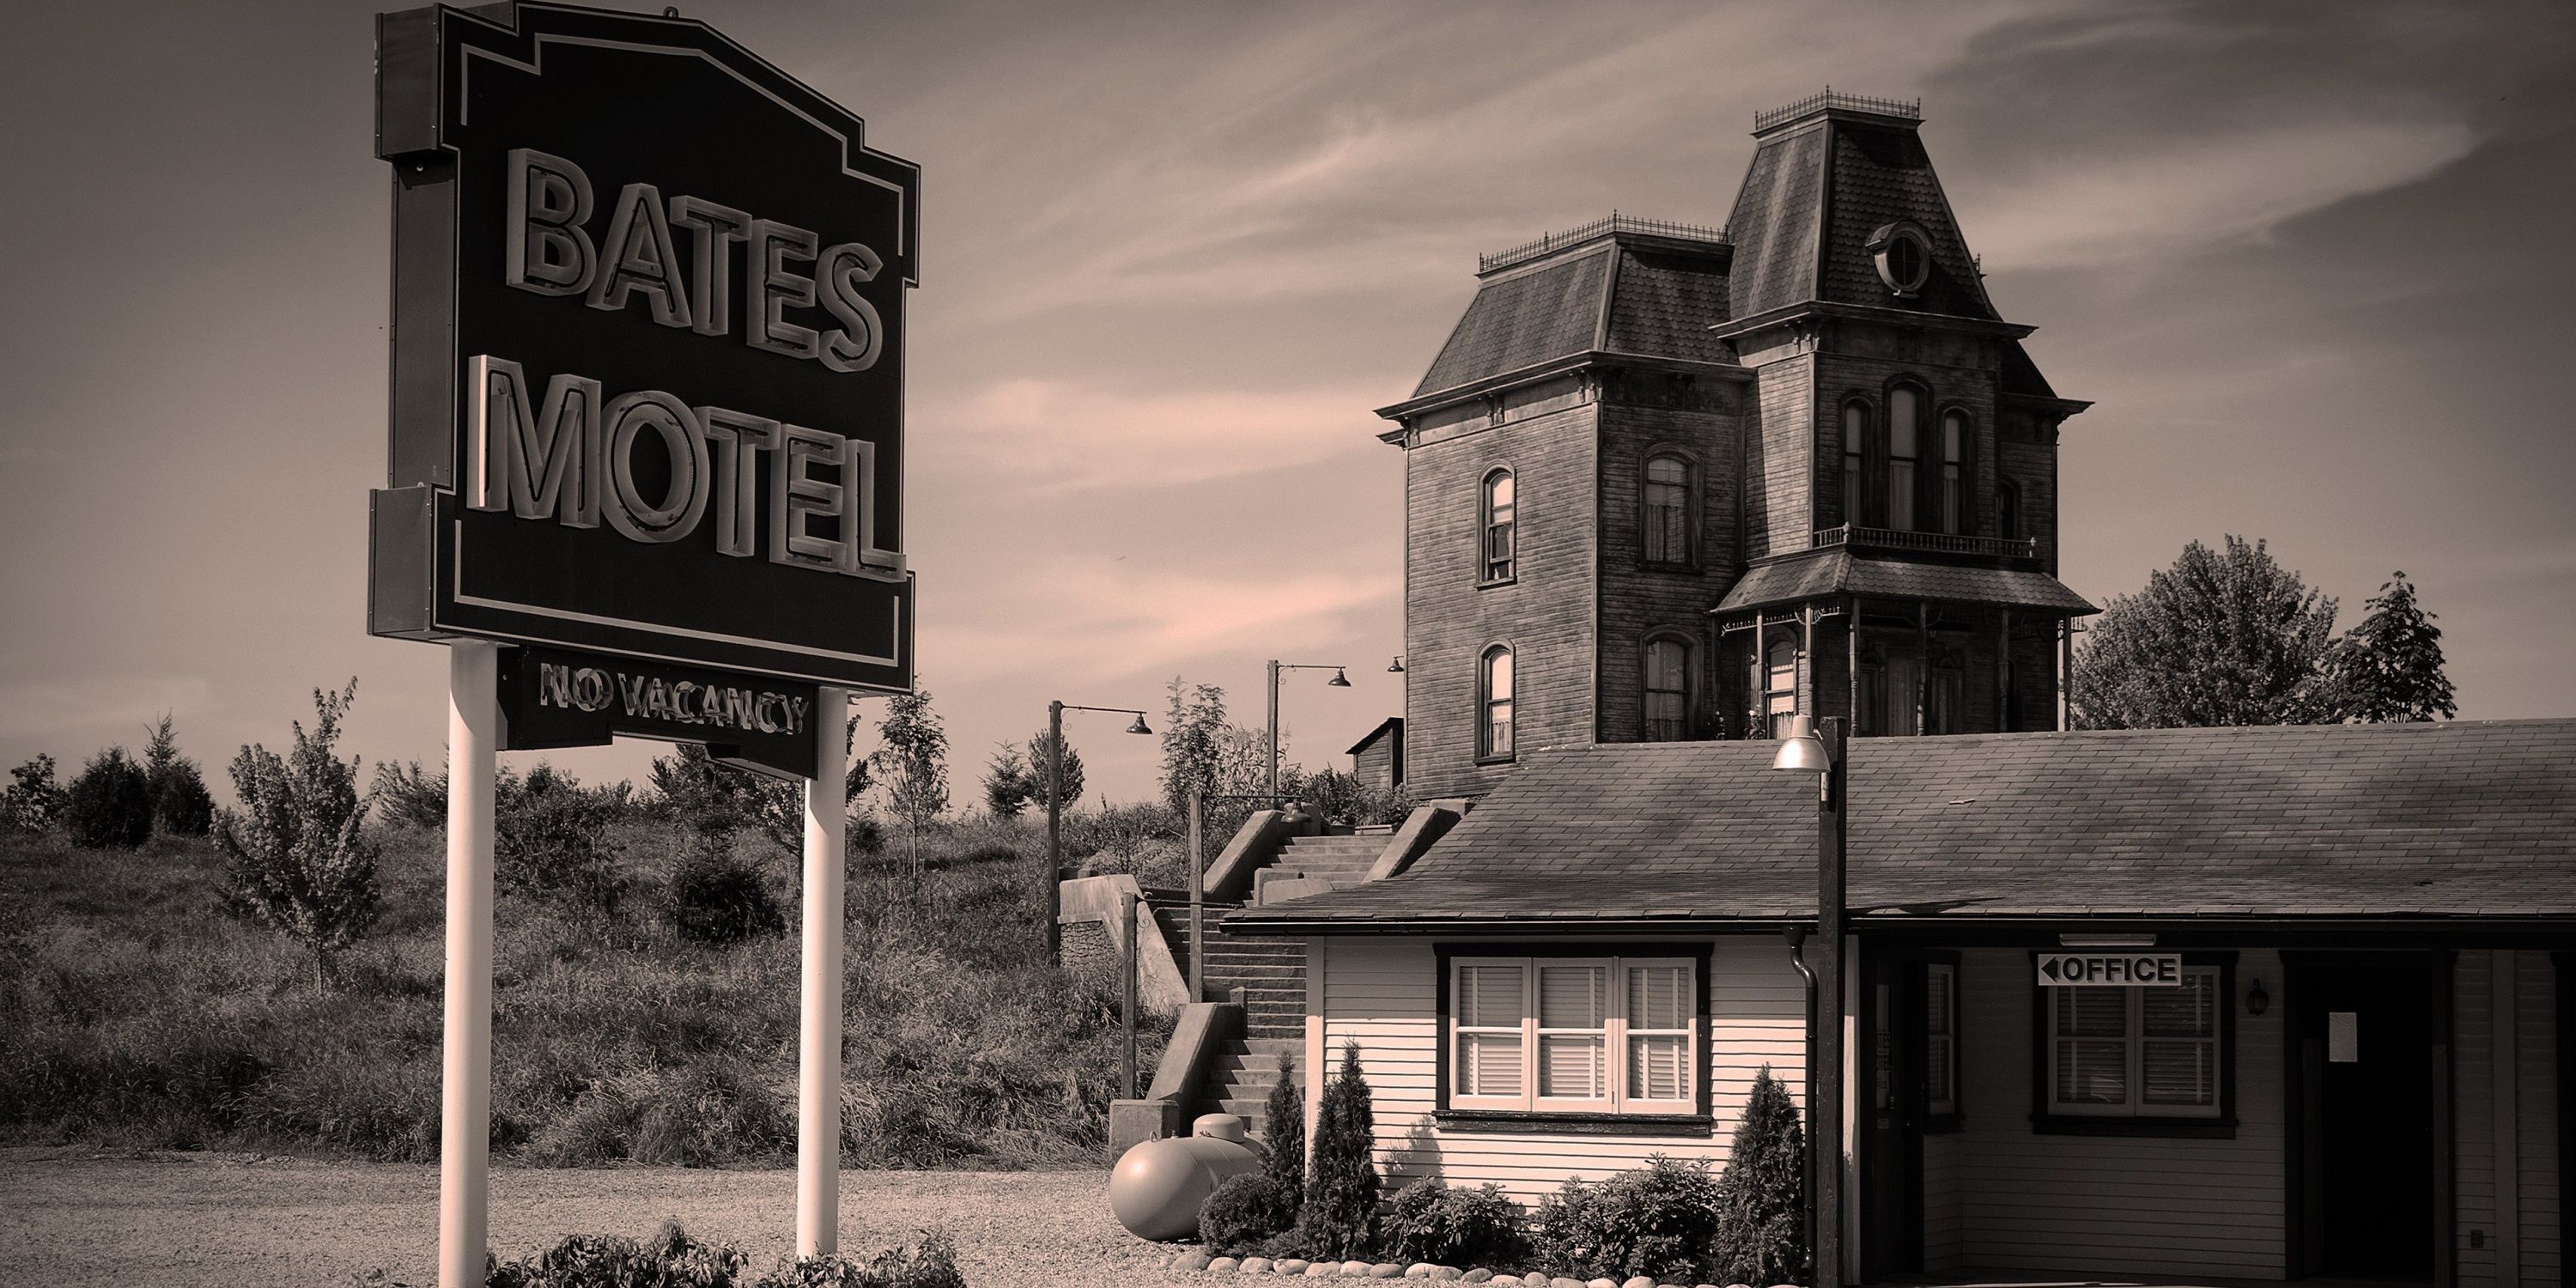 The Bates Motel in Psycho.